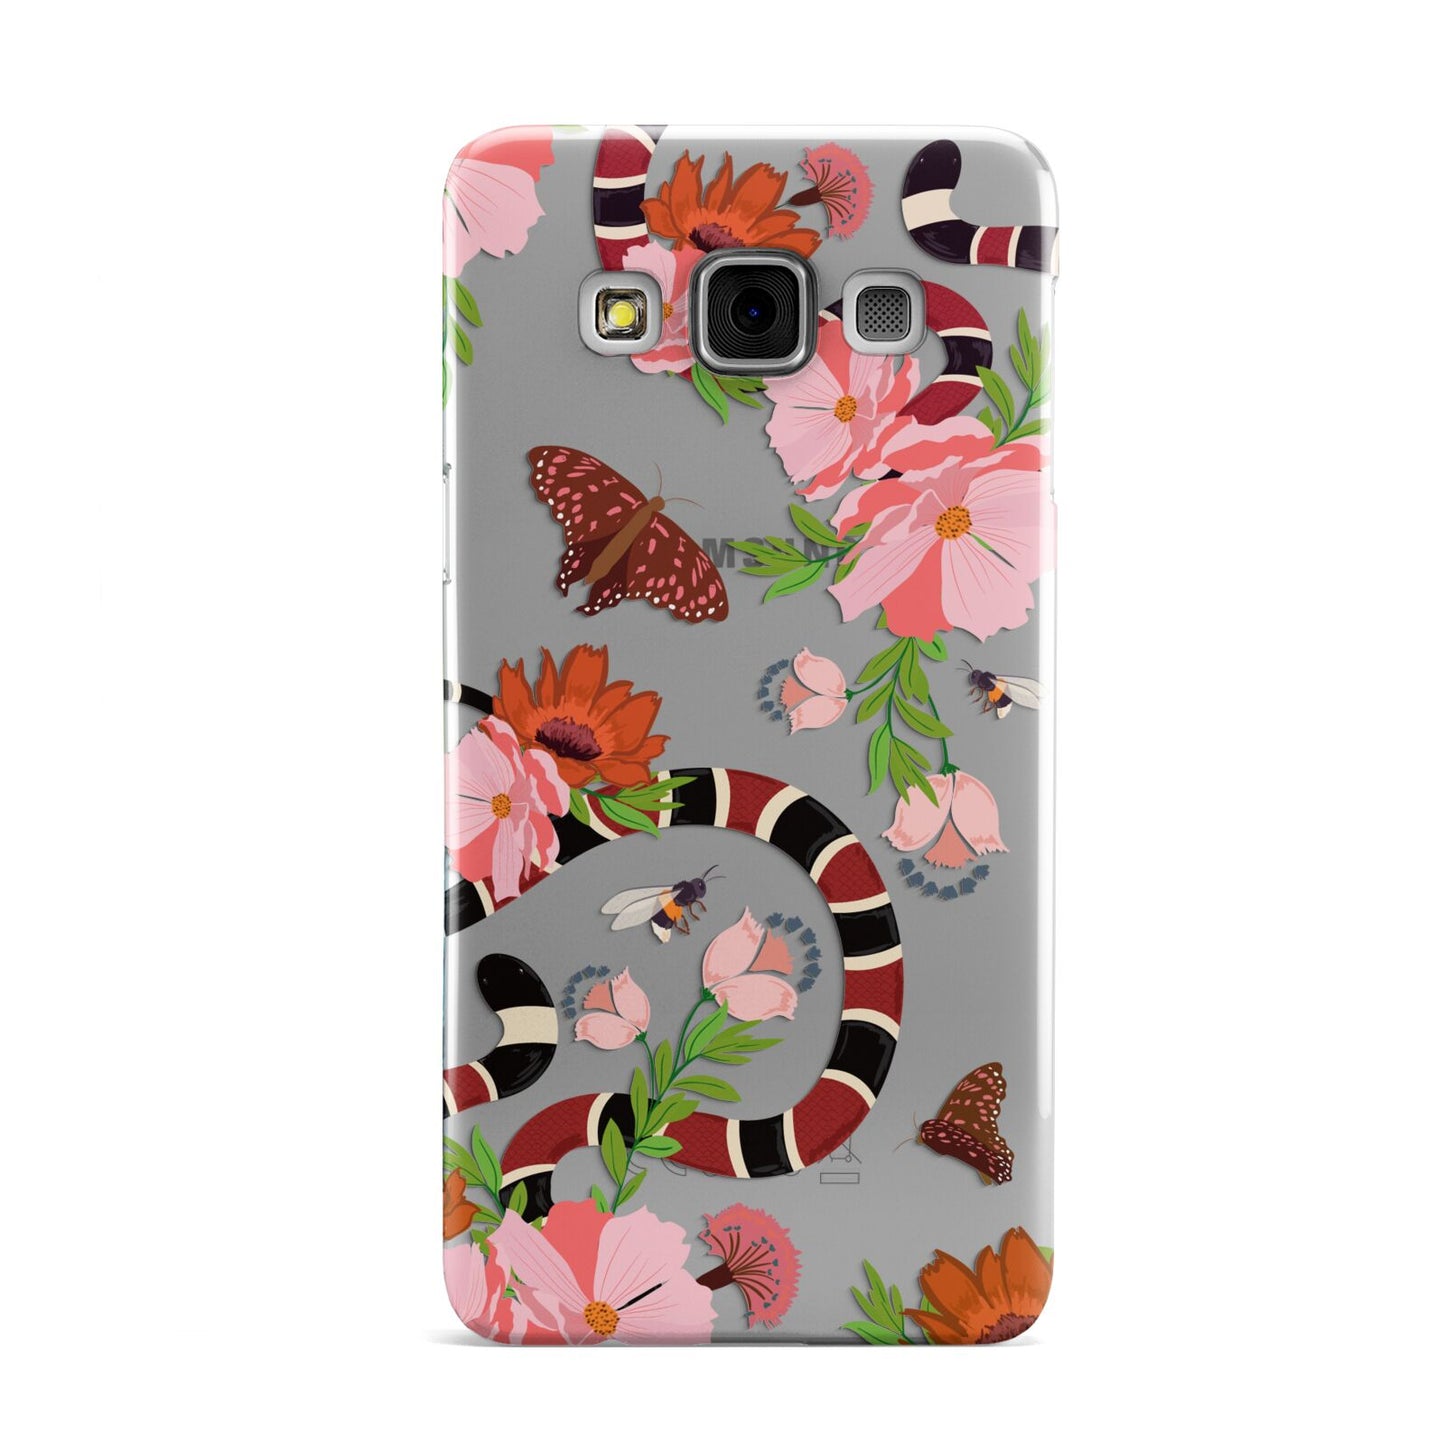 Floral Snake Samsung Galaxy A3 Case